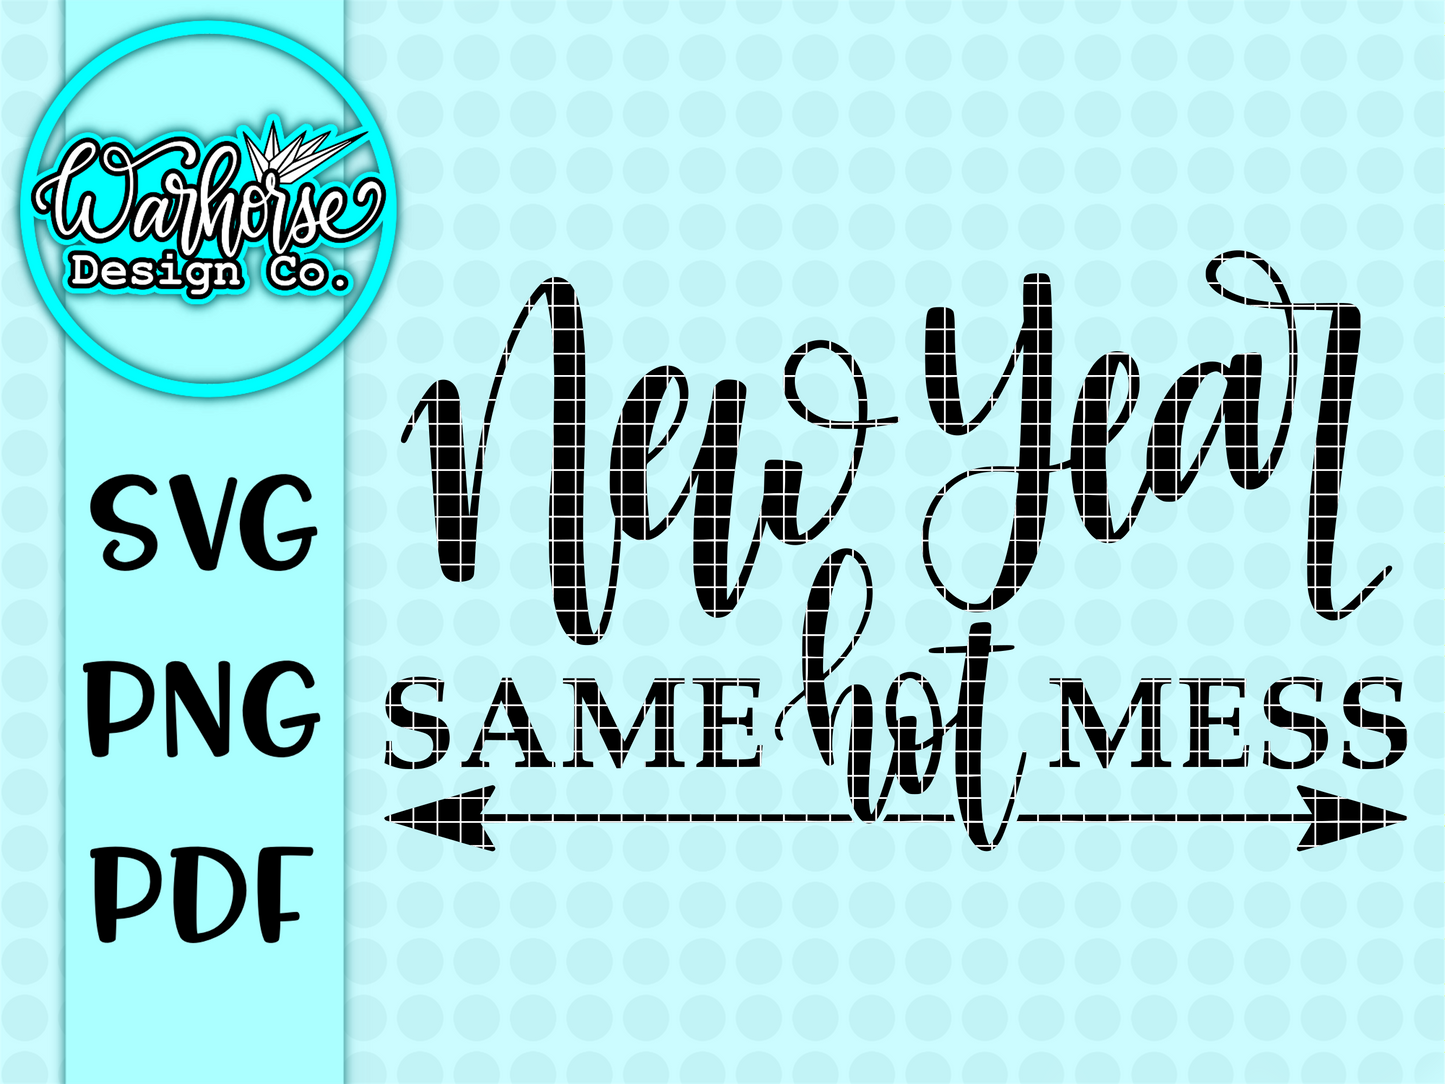 New Year, Same Hot Mess SVG PNG PDF